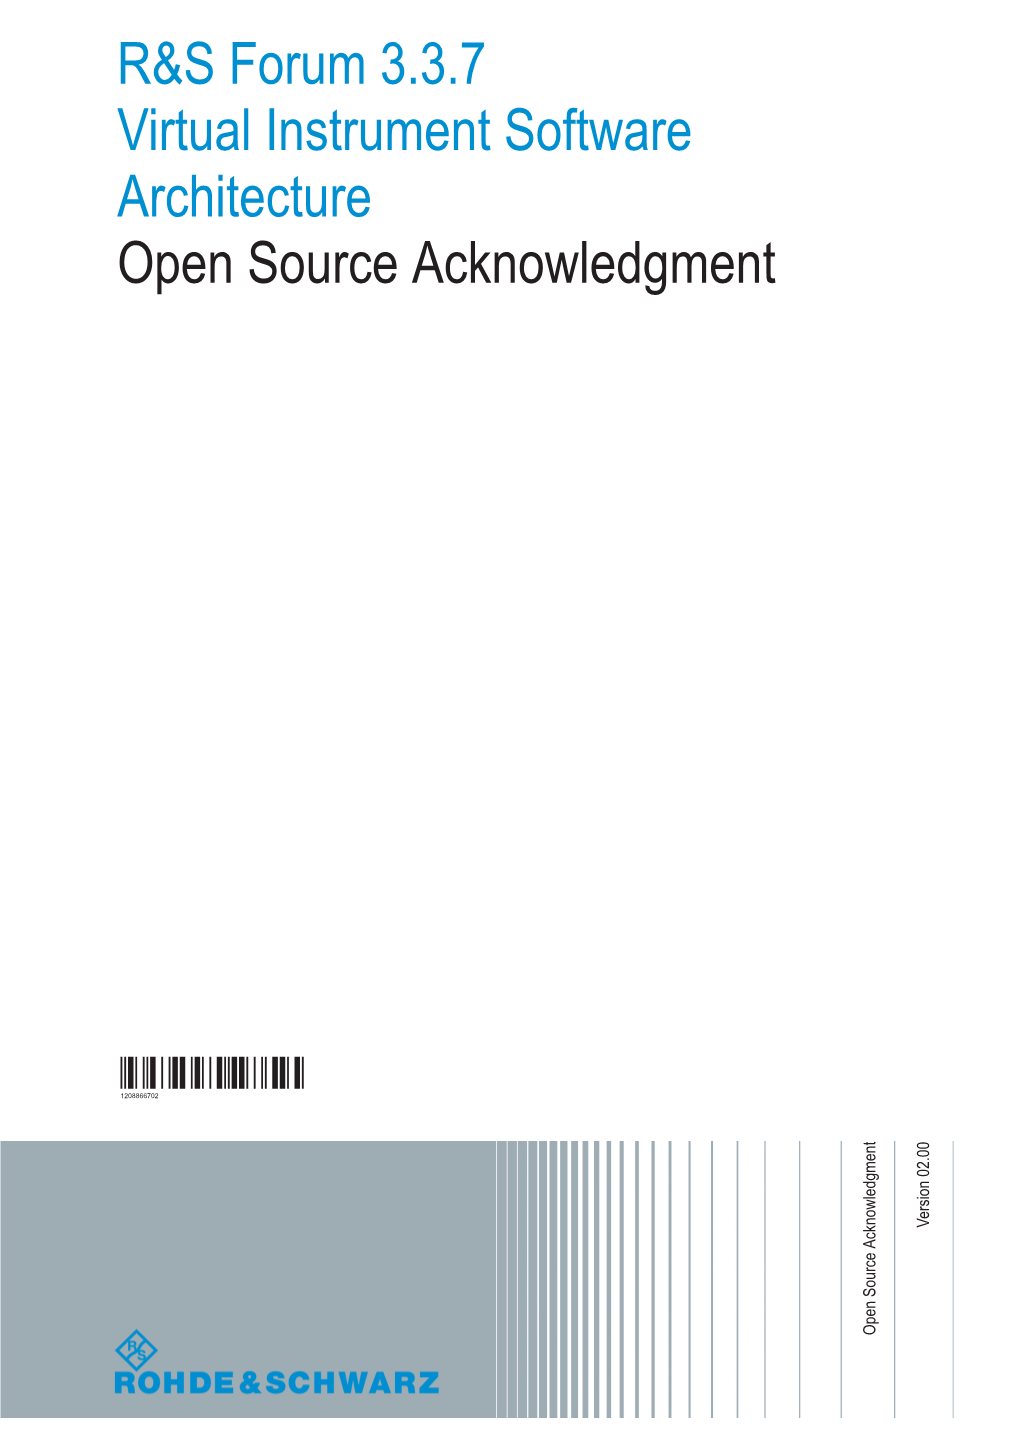 R&S Forum 3.3.7 Virtual Instrument Software Architecture Open Source